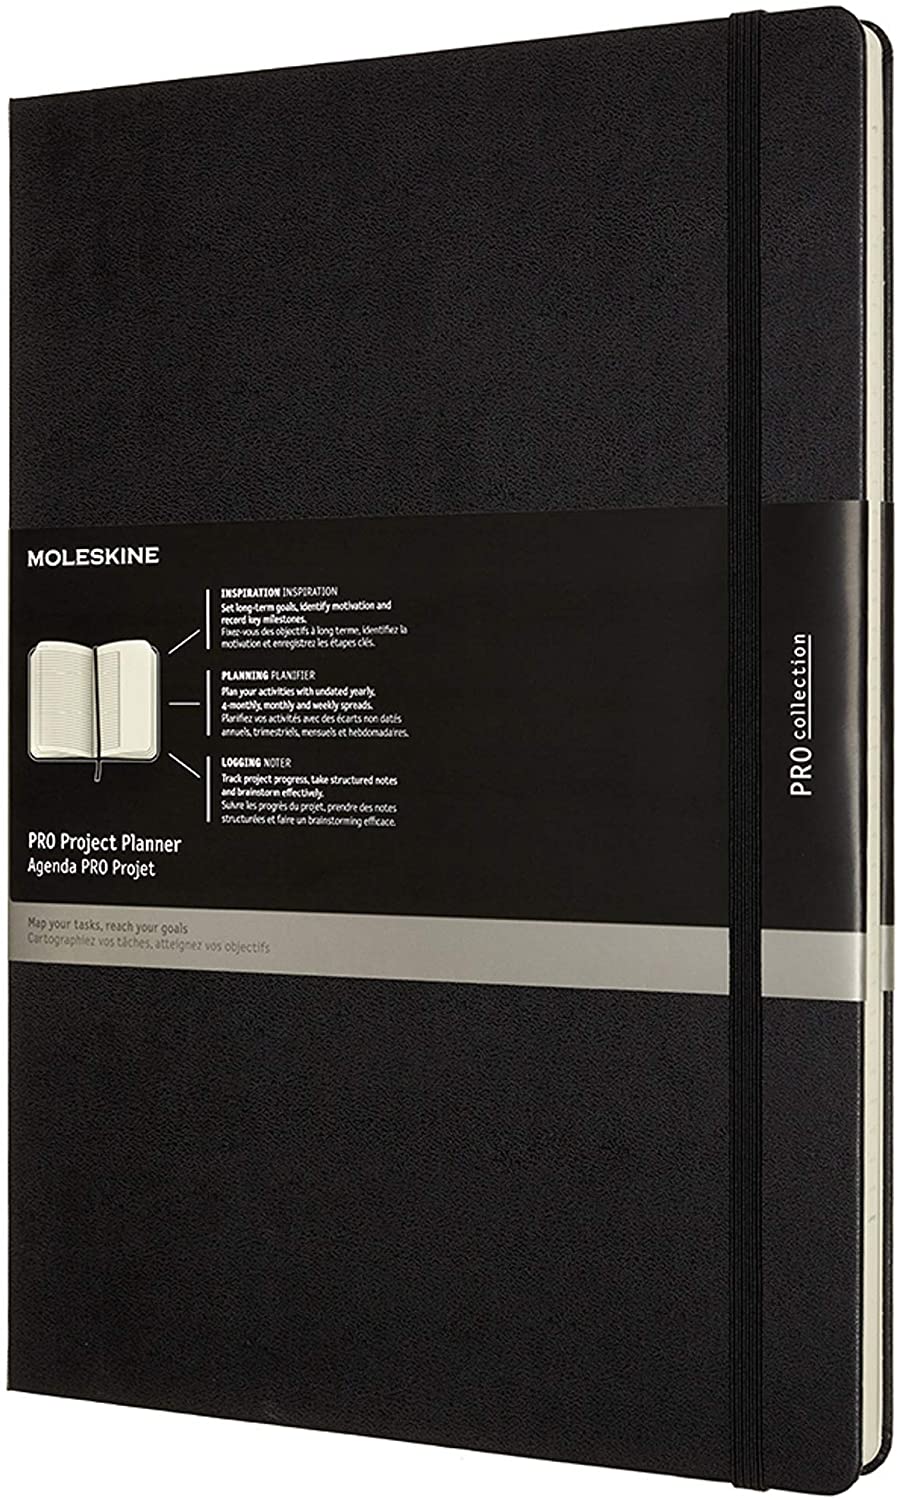 Agenda - Moleskine - Pro Project Planner - Black, A4, Hard Cover - Moleskine